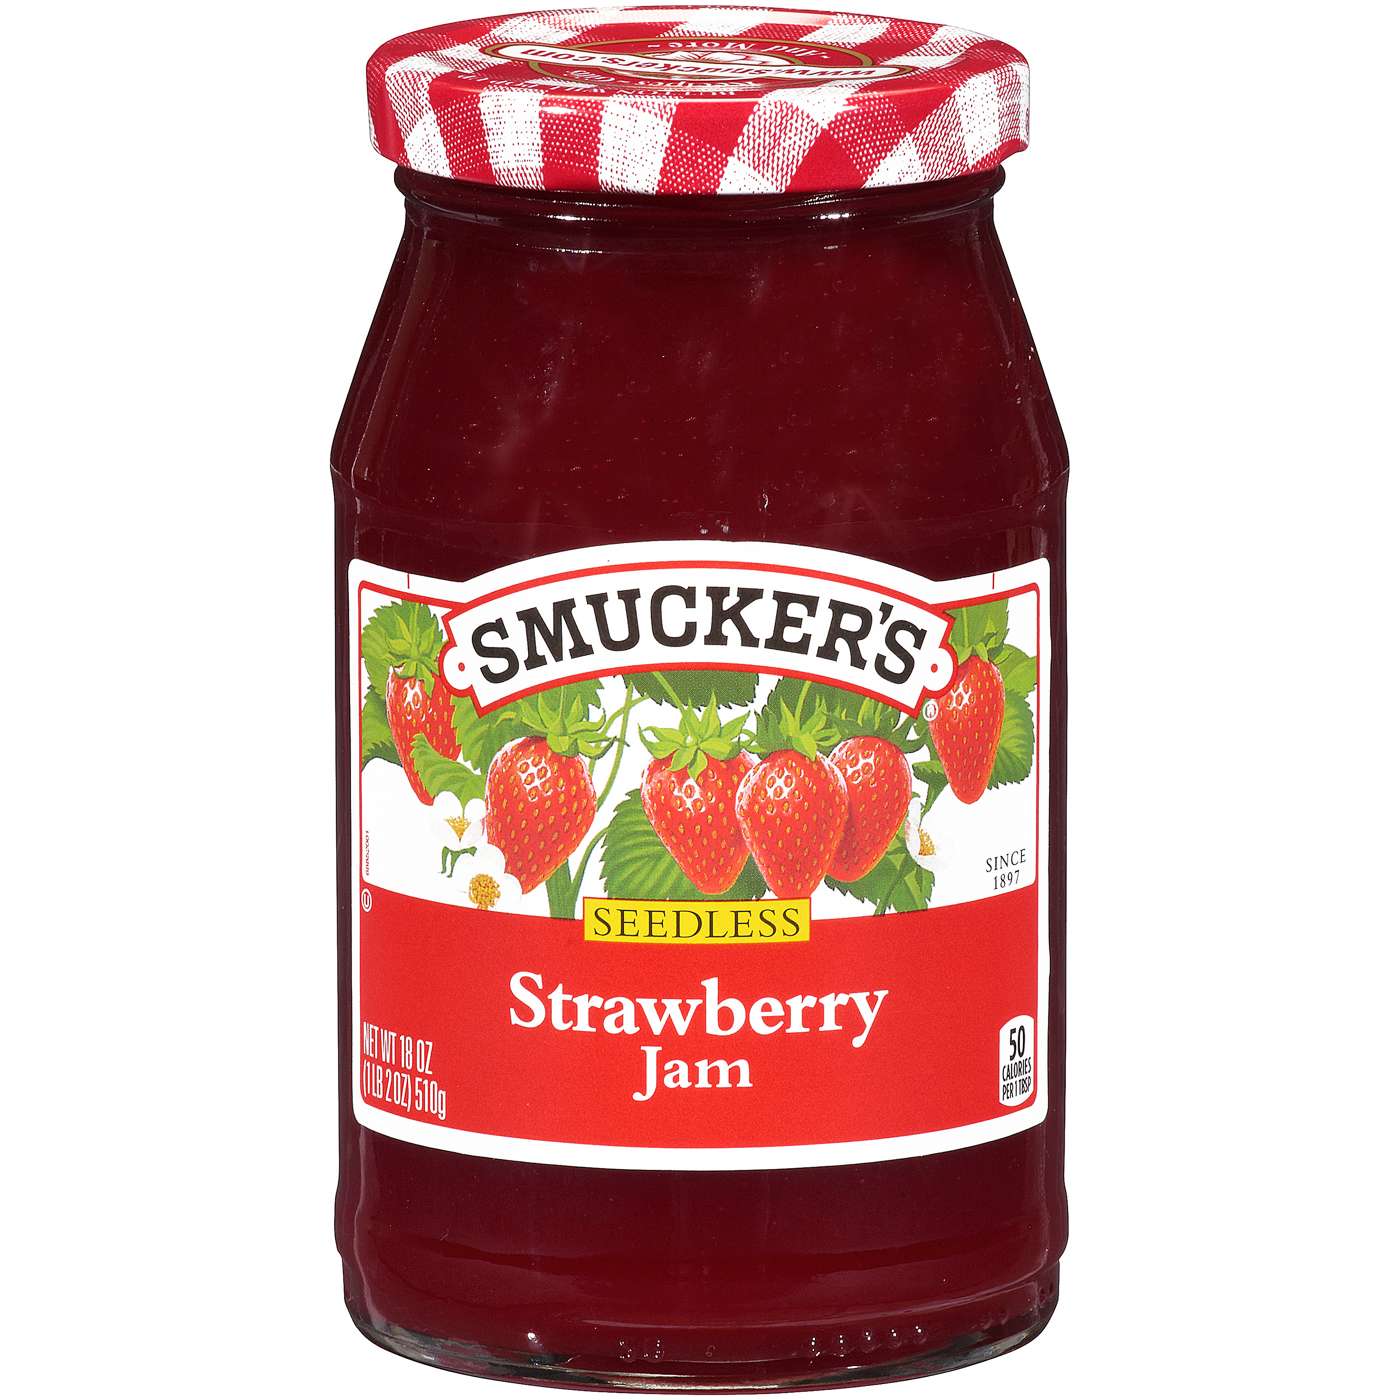 Smucker's Seedless Strawberry Jam; image 1 of 2